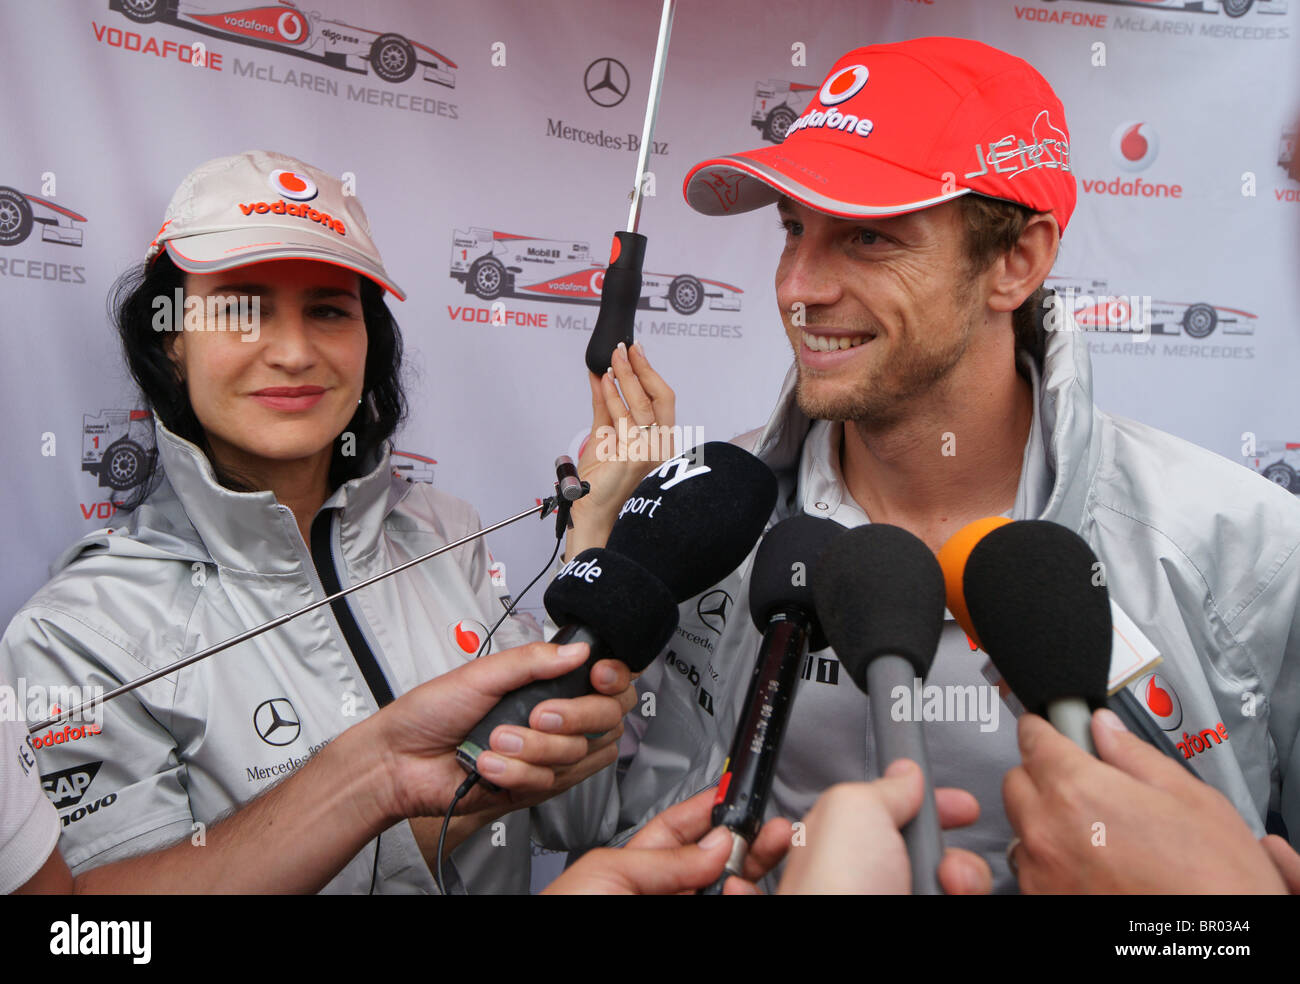 FIA Formula One World Championship, Jenson Button, Vodafone McLaren Mercedes F1 Hockenheim 2010 Stock Photo